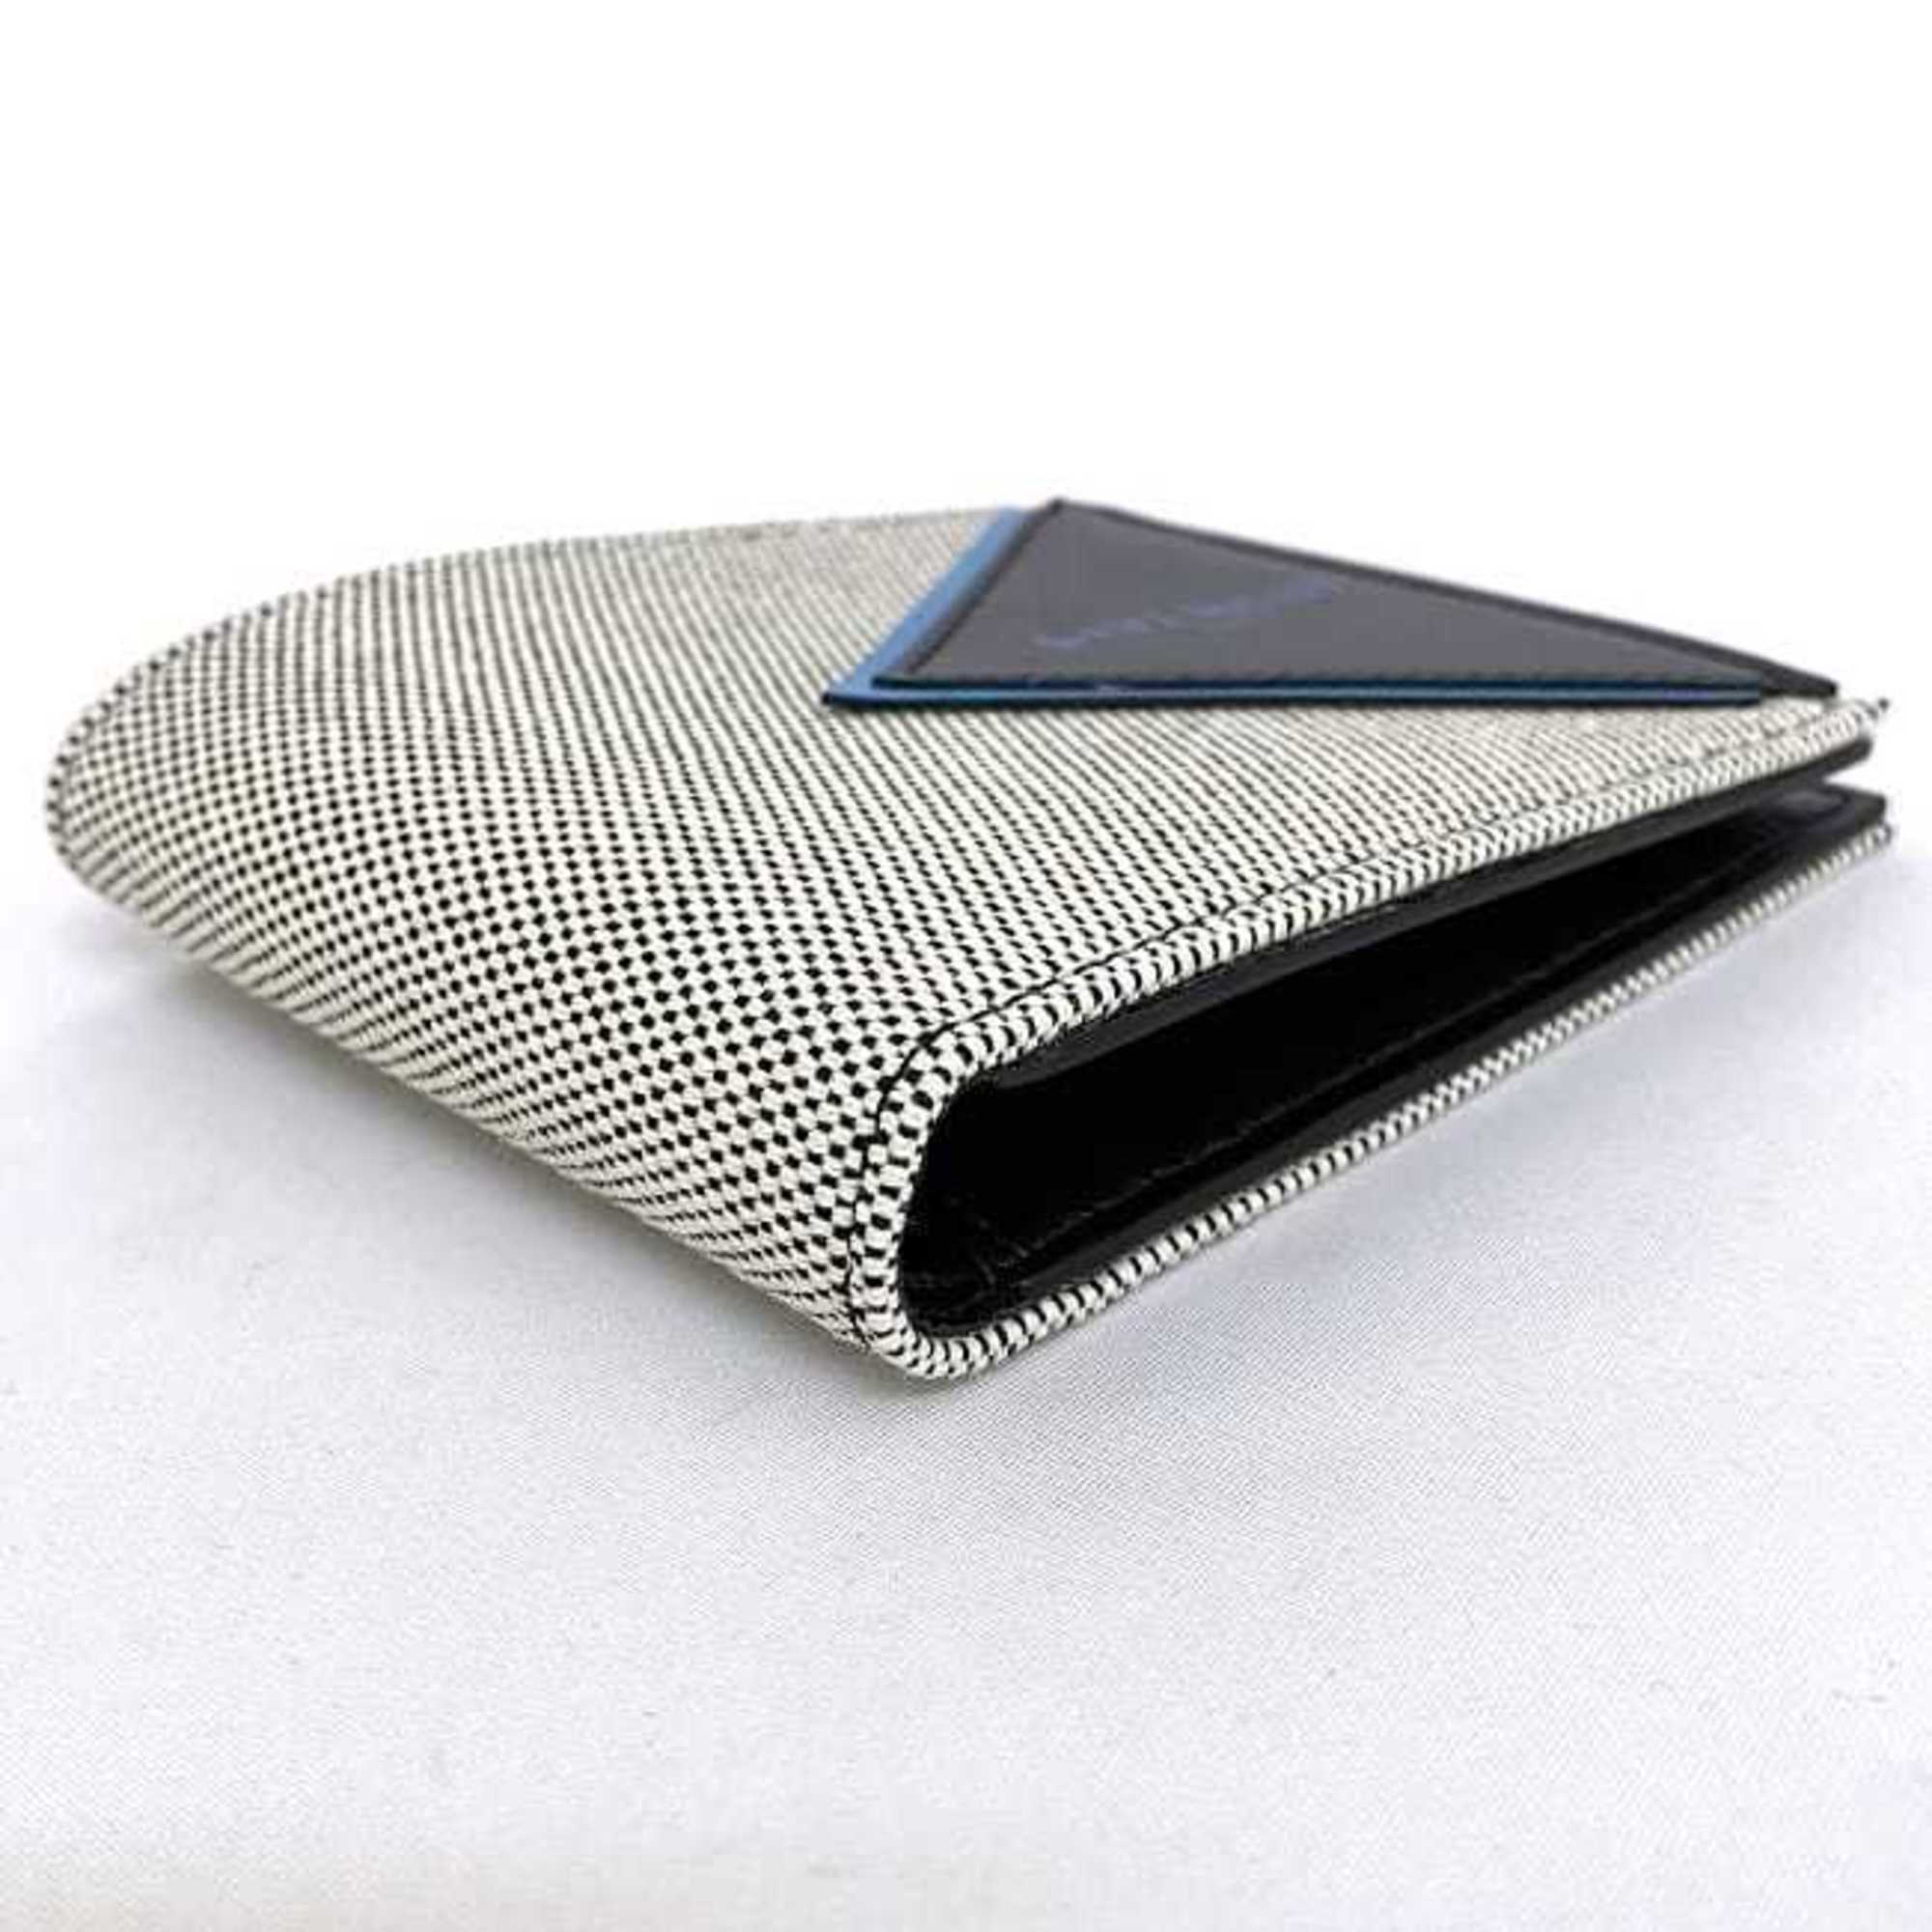 Givenchy bi-fold wallet gray black blue BK6005K0SW 449 canvas leather GIVENCHY men's